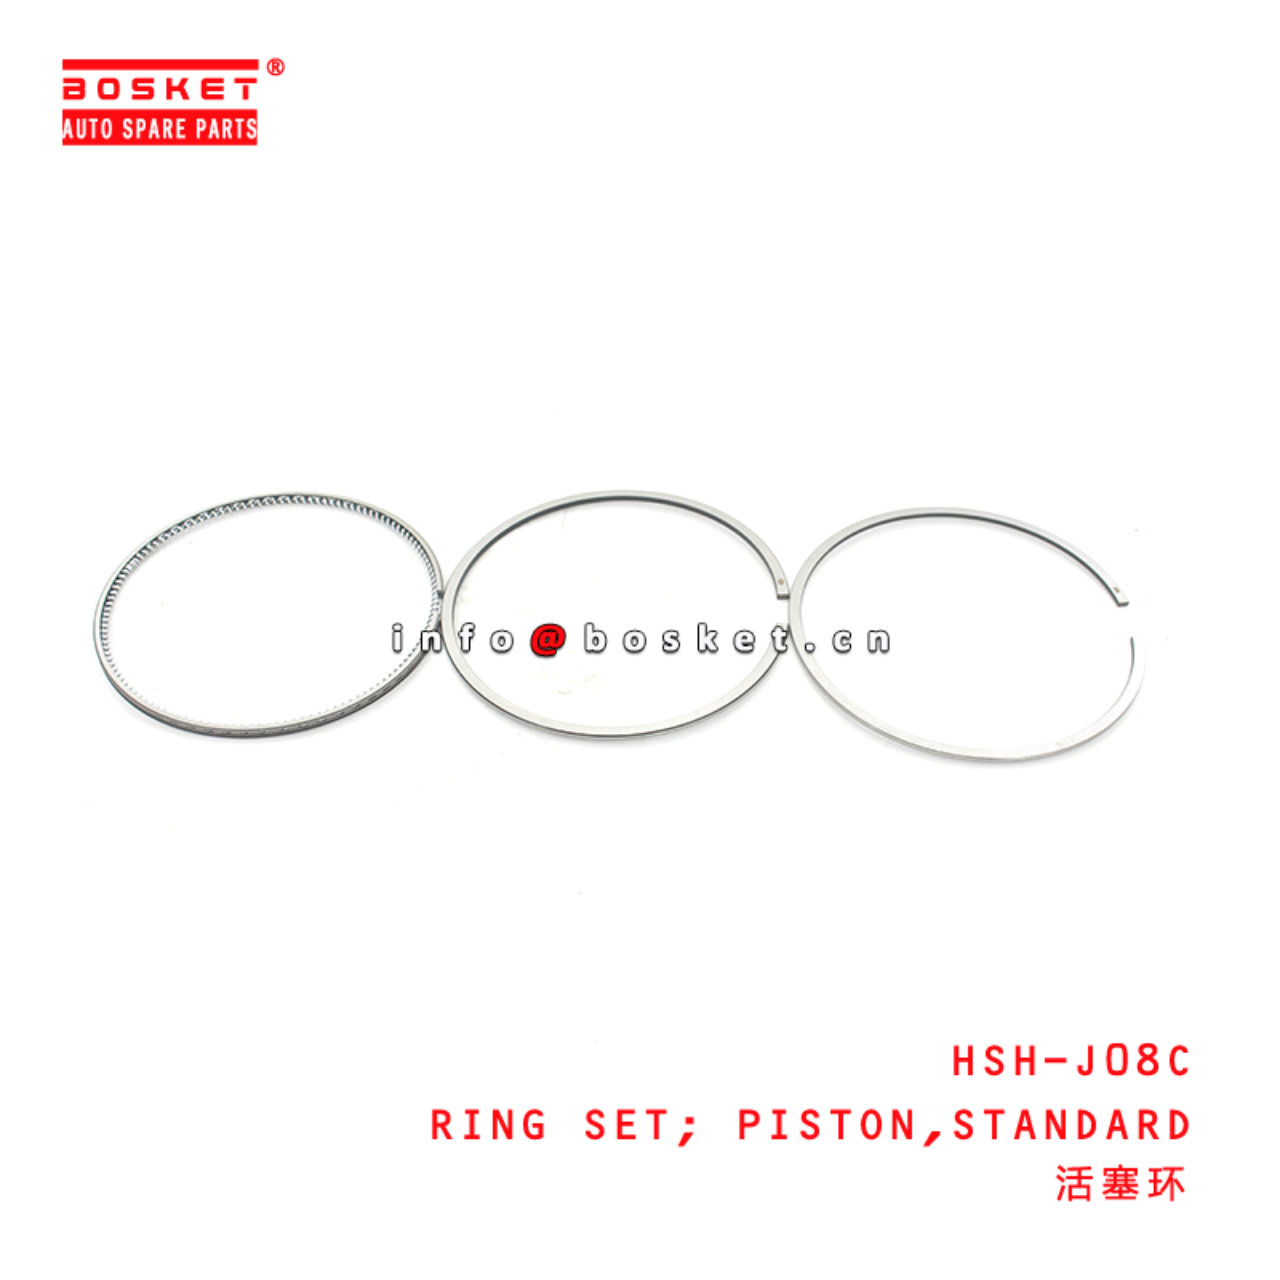 HSH-J08C Standard Piston Ring Set Suitable for ISUZU HINO J08C